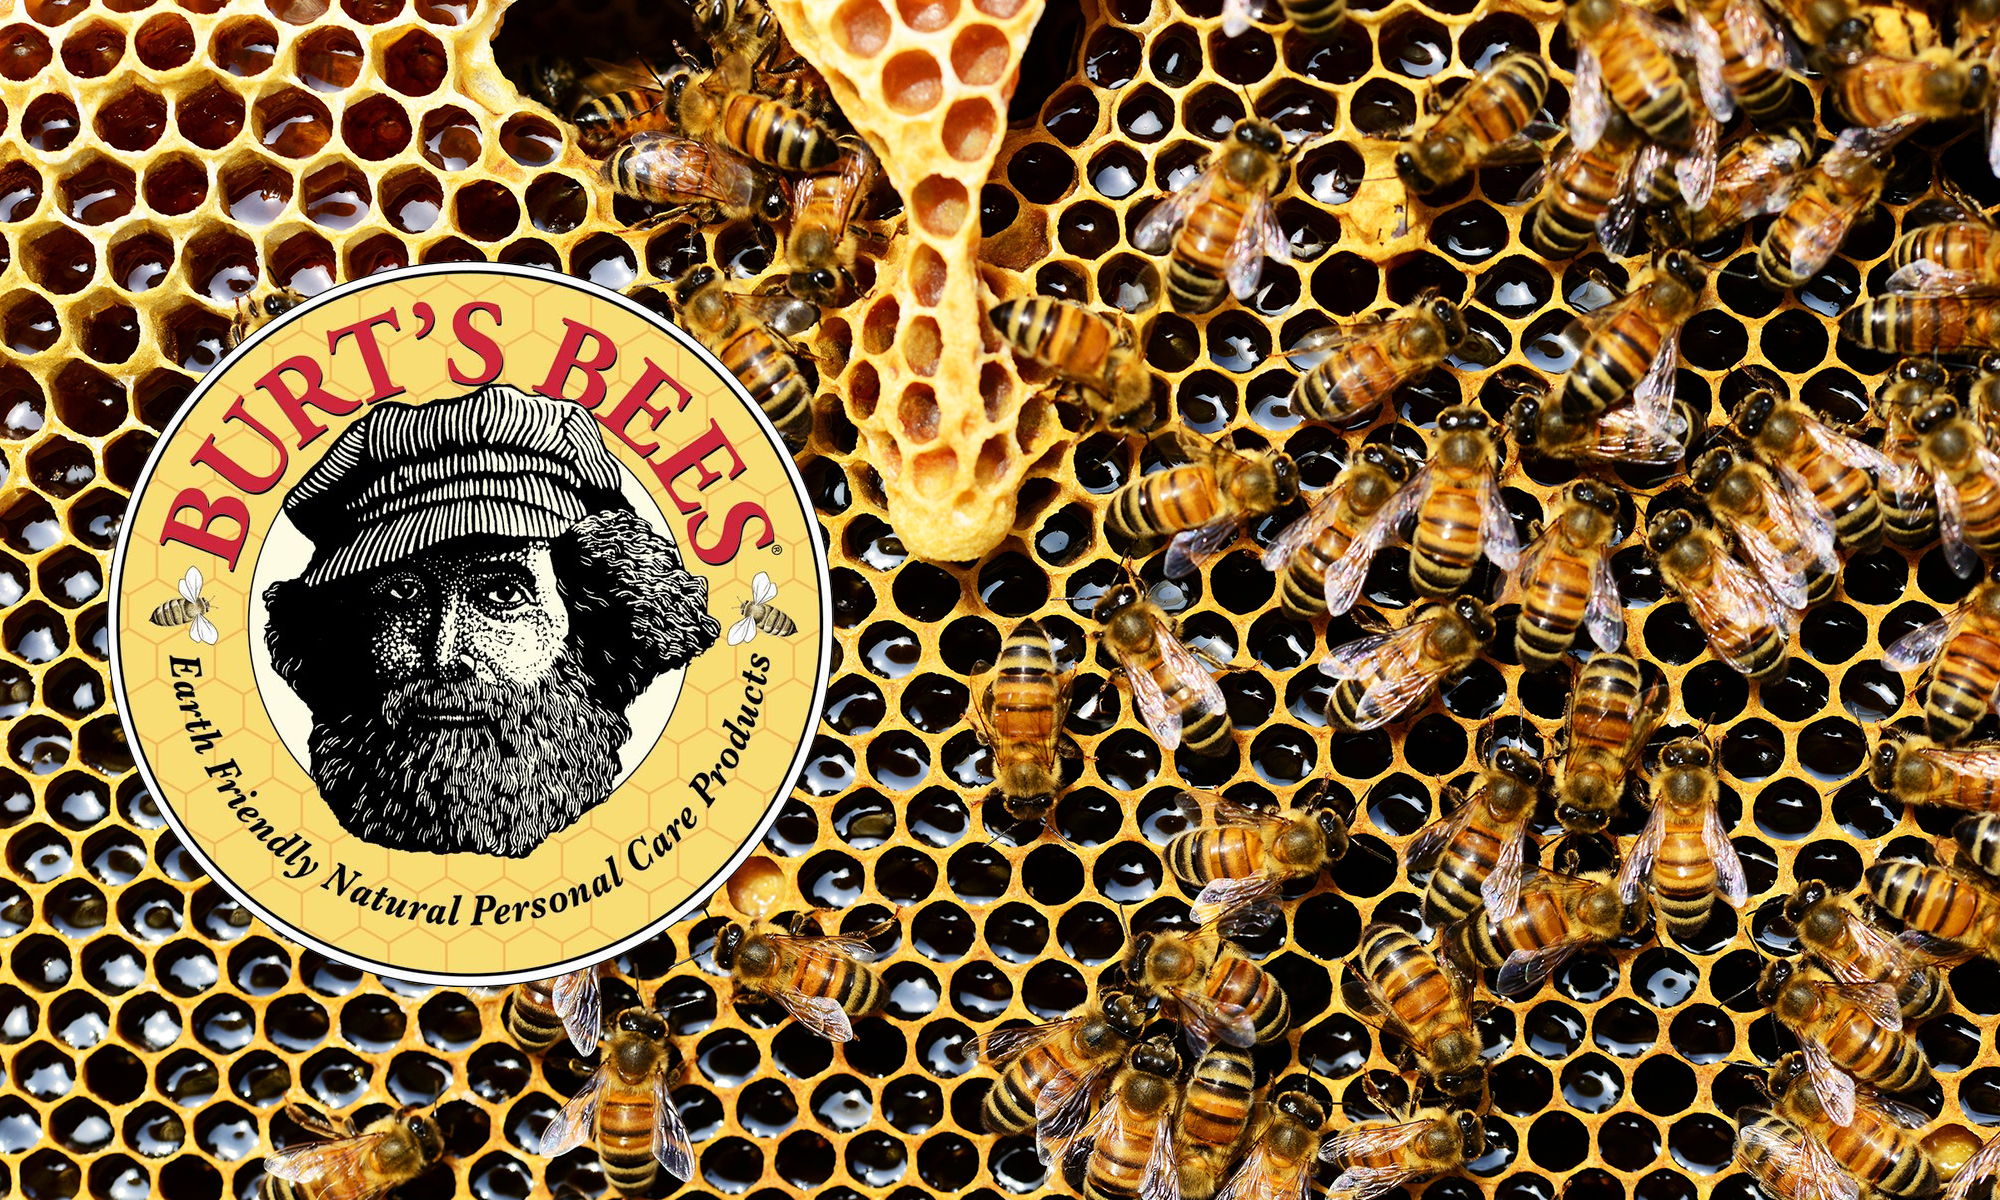 Burt's Bees original logo and bee photo